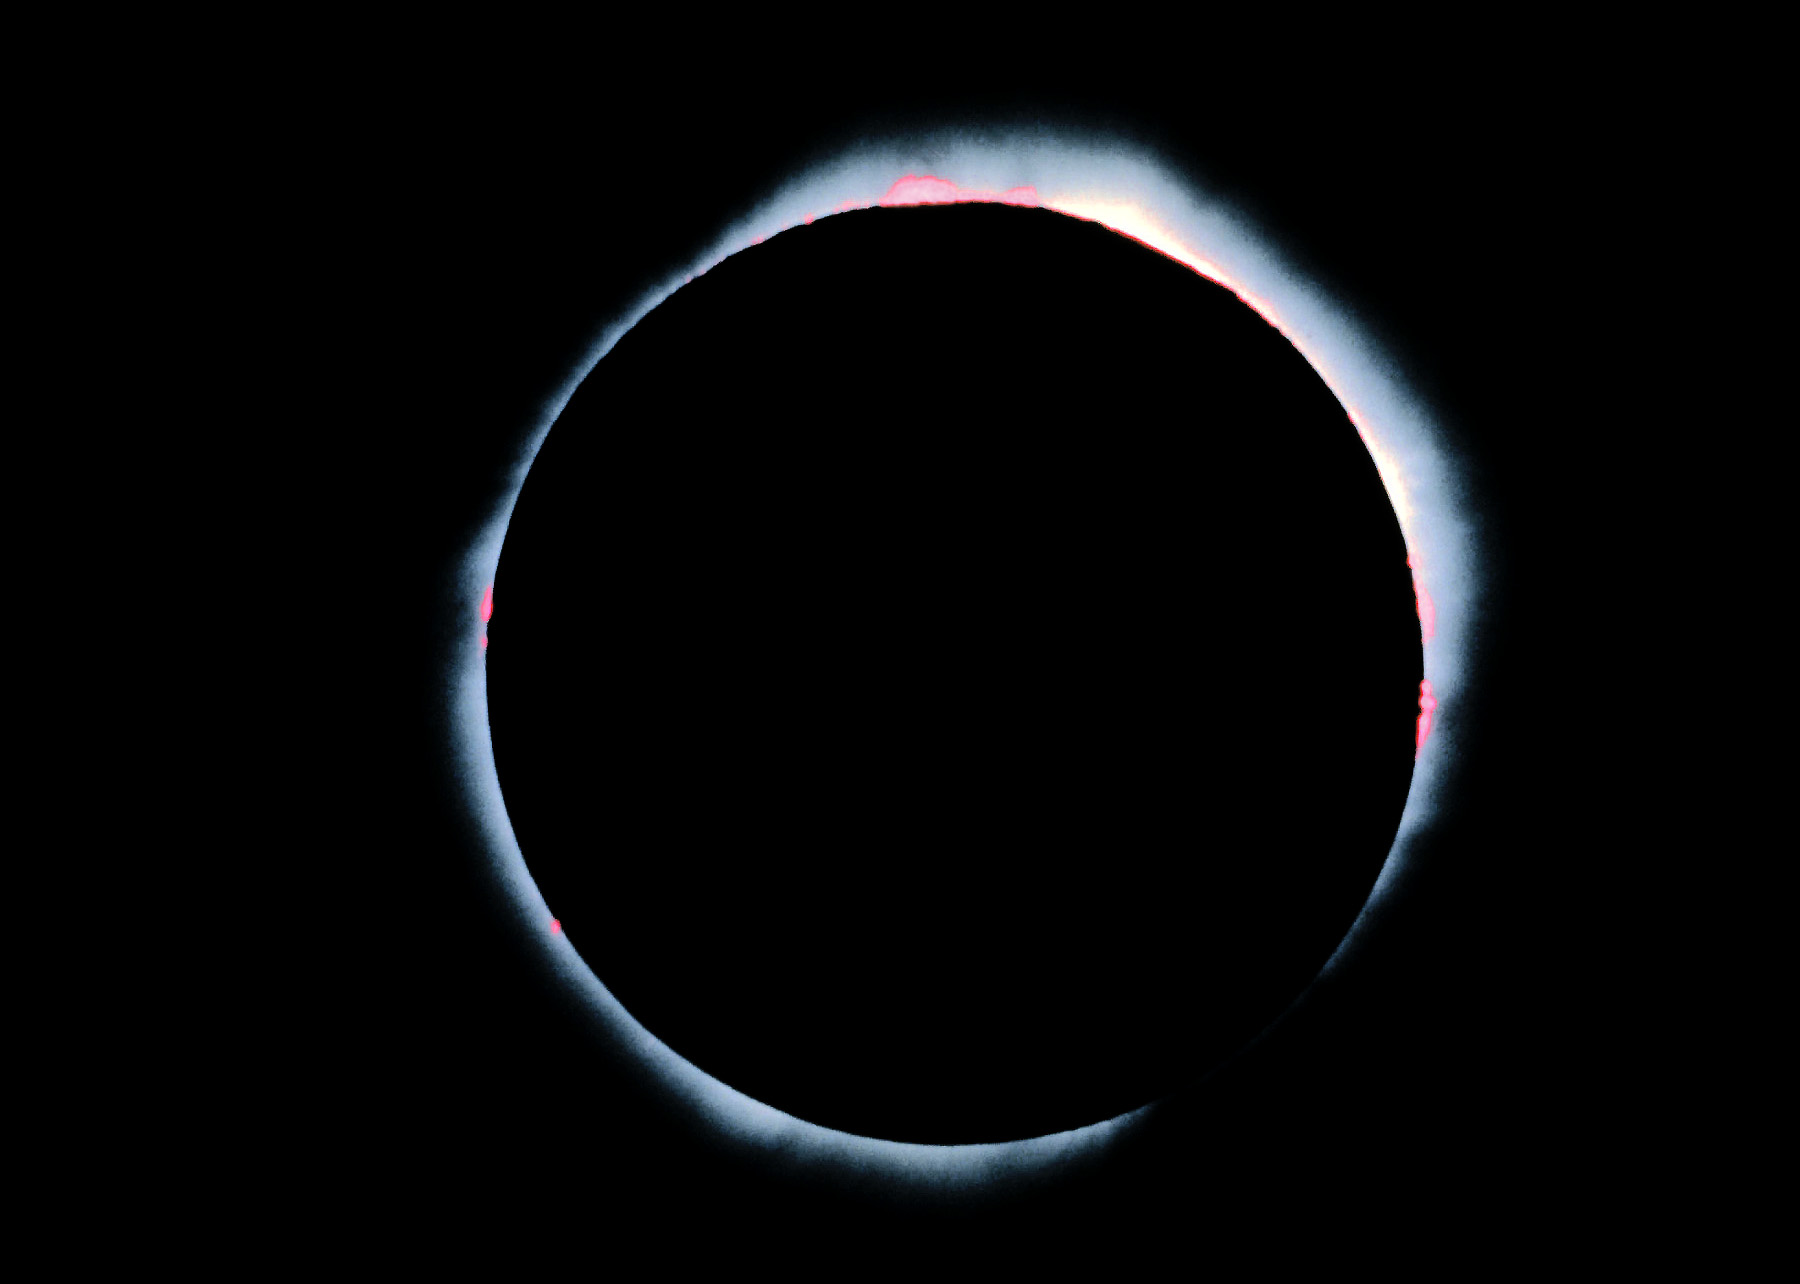 Eclipse 1977 - A54 - Prominences